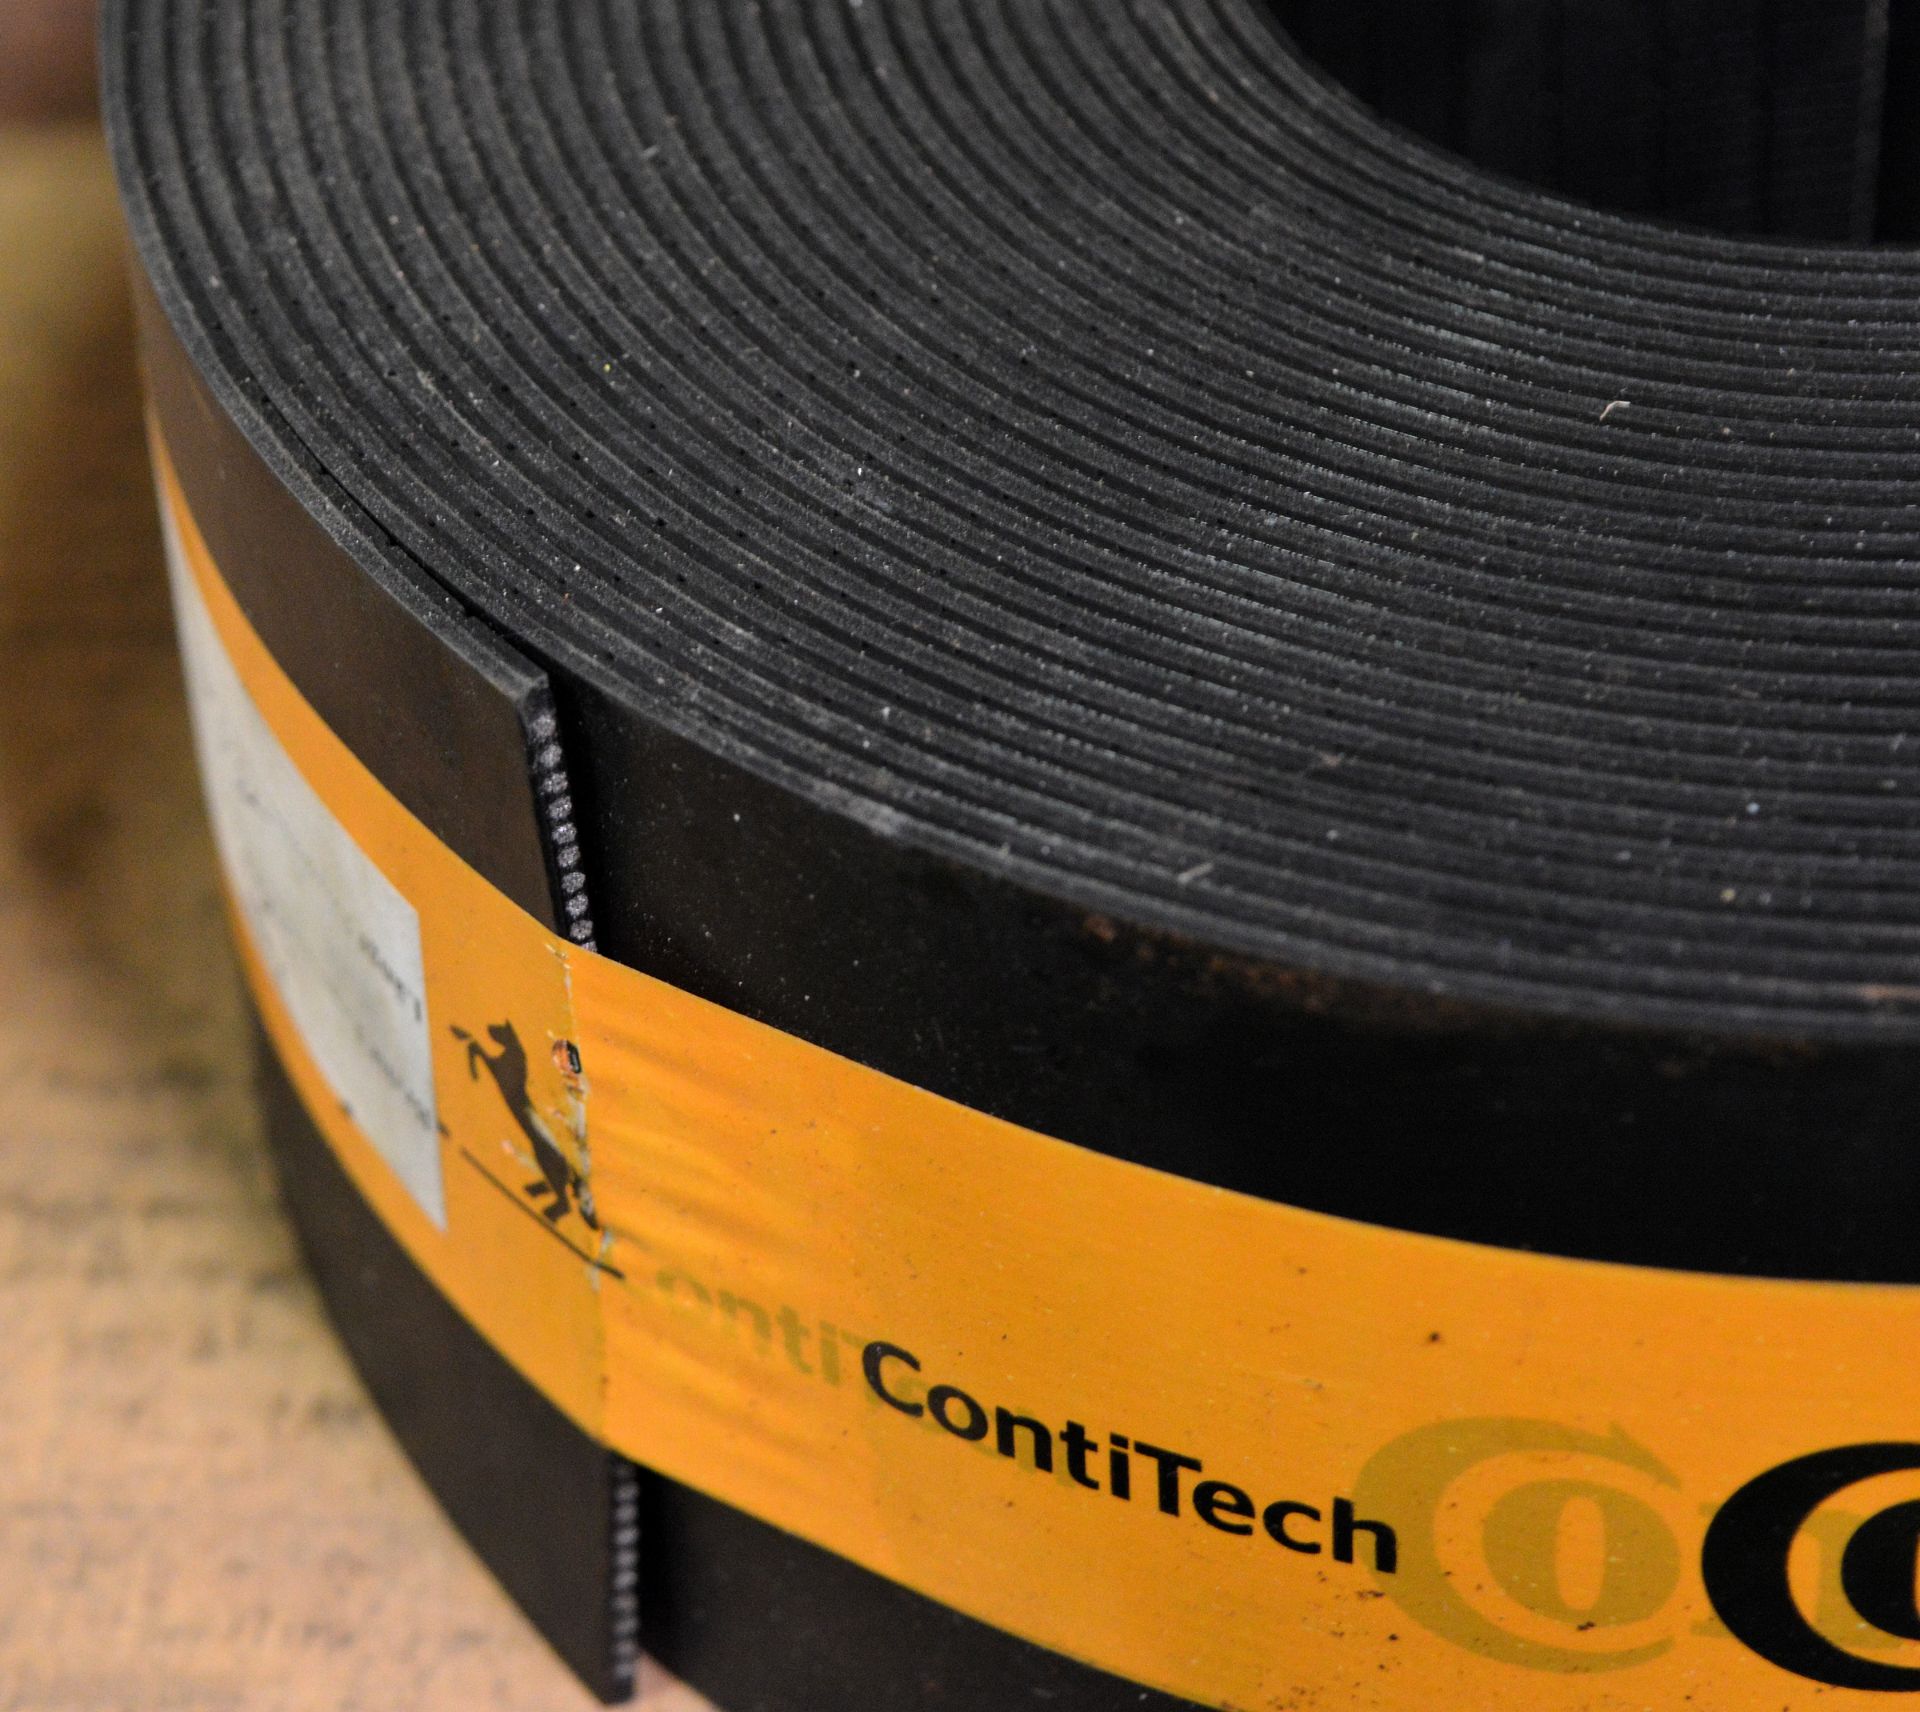 Continental Contitech Belt reel - M49Q25 - Image 2 of 2